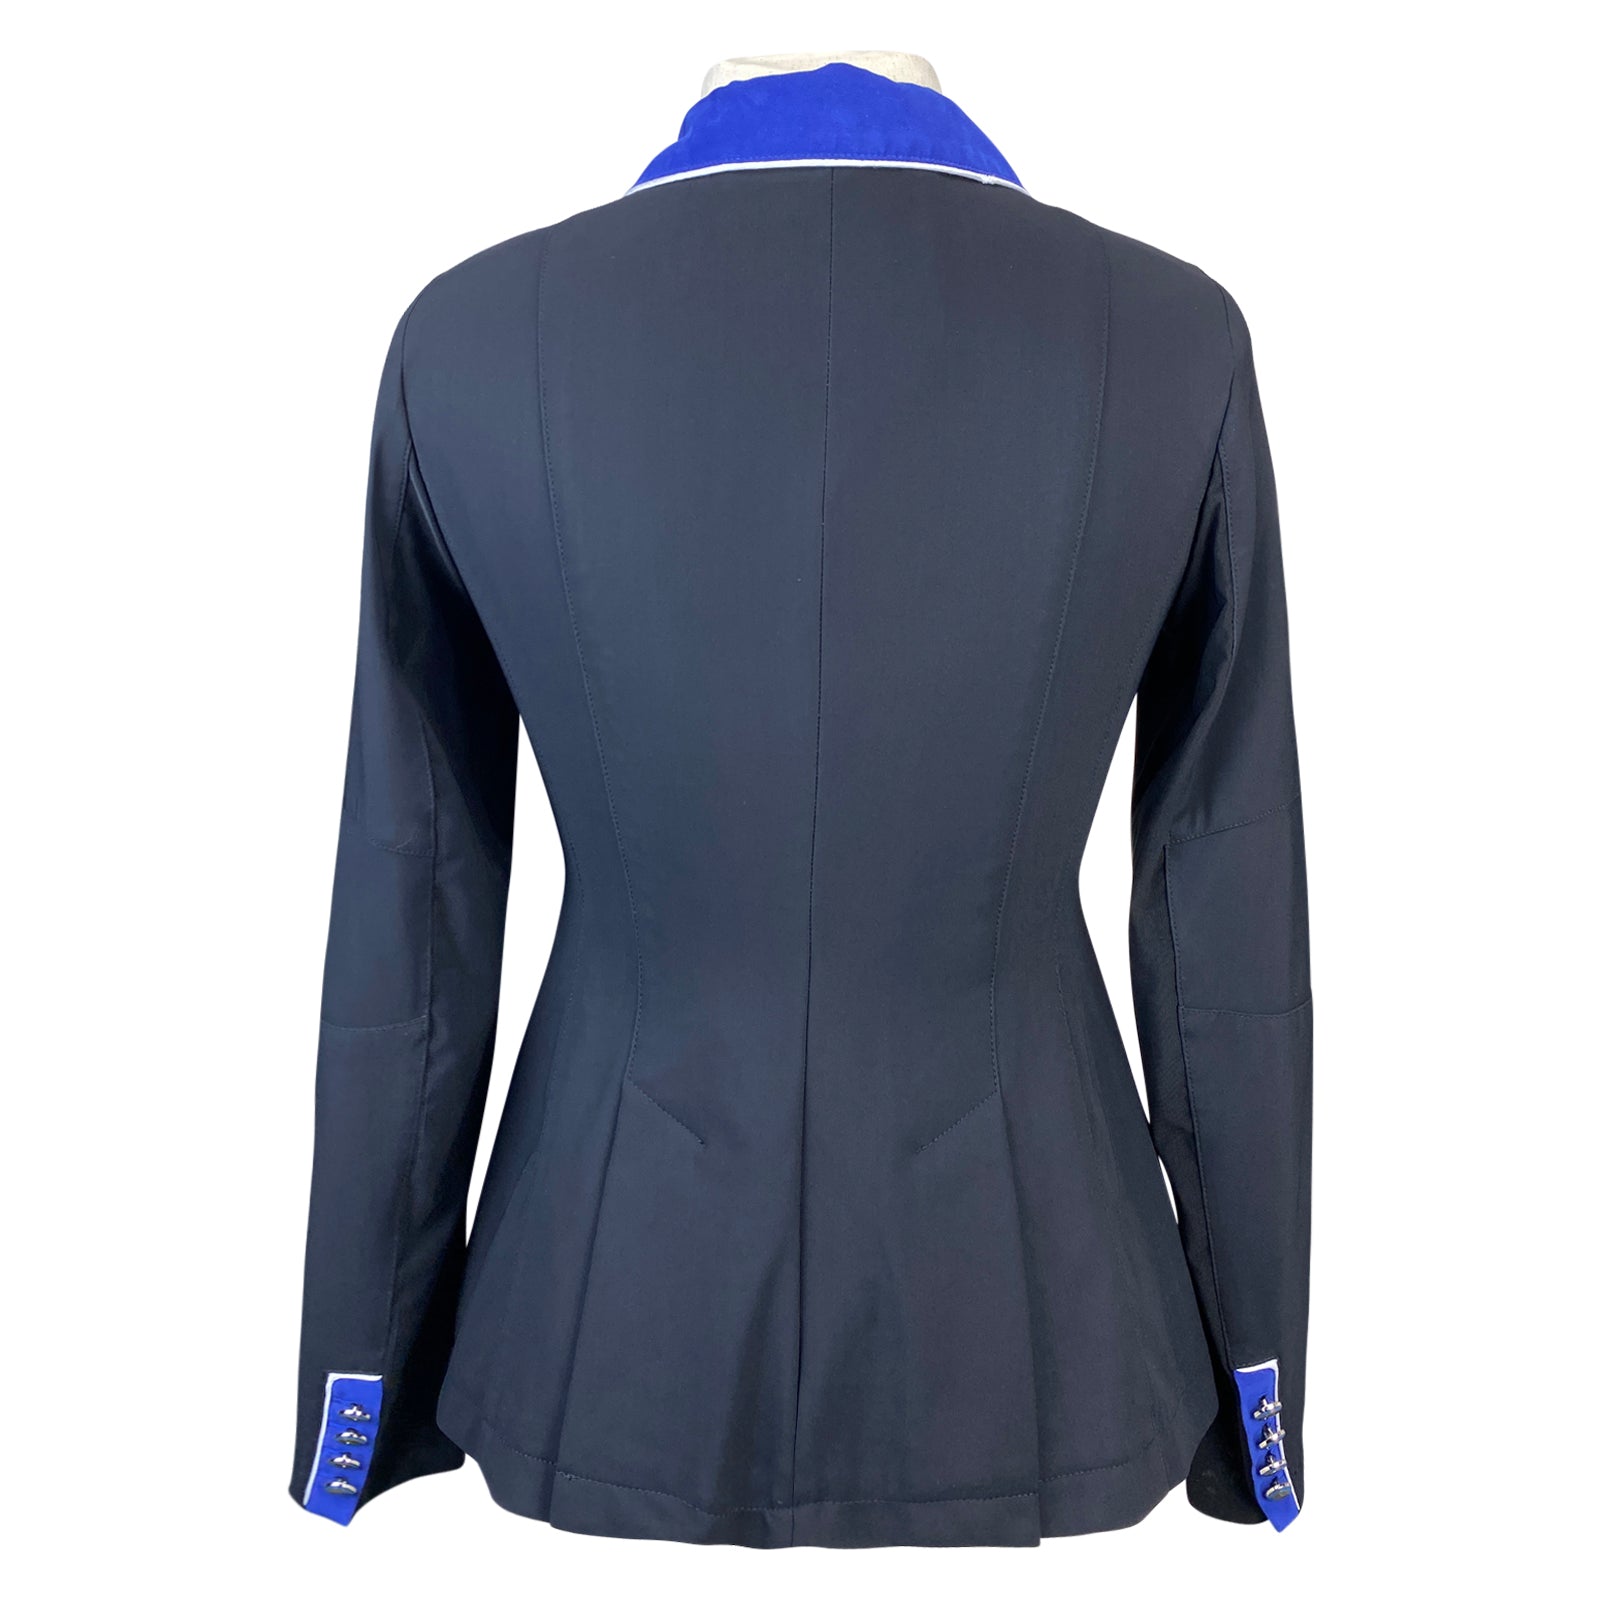 Tredstep 'Solo Vision' Coat in Black/Blue - Women's 14